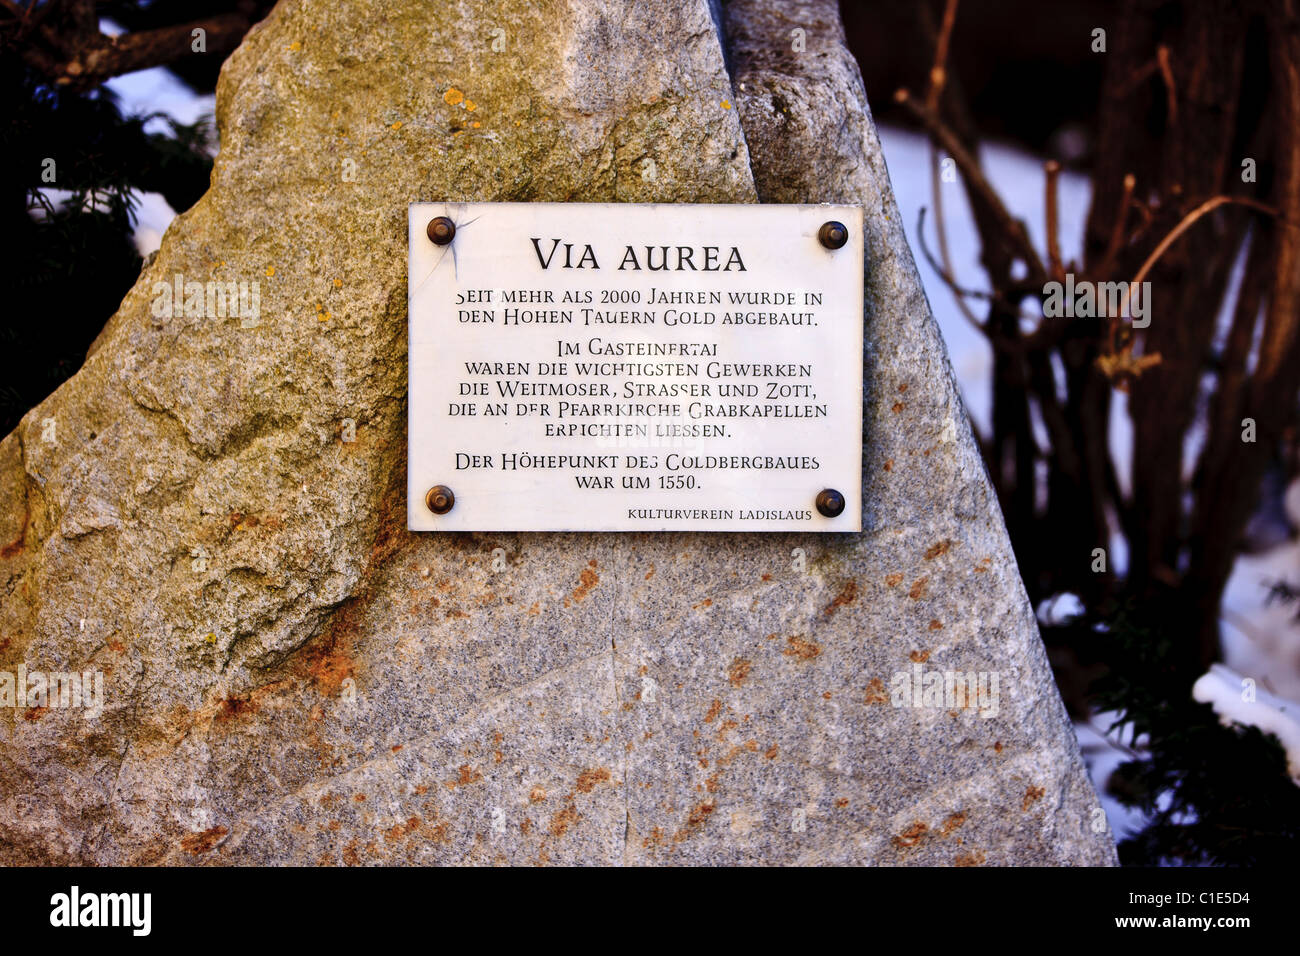 Via Aurea touristic route information sign in Bad Hofgastein Austria Stock Photo